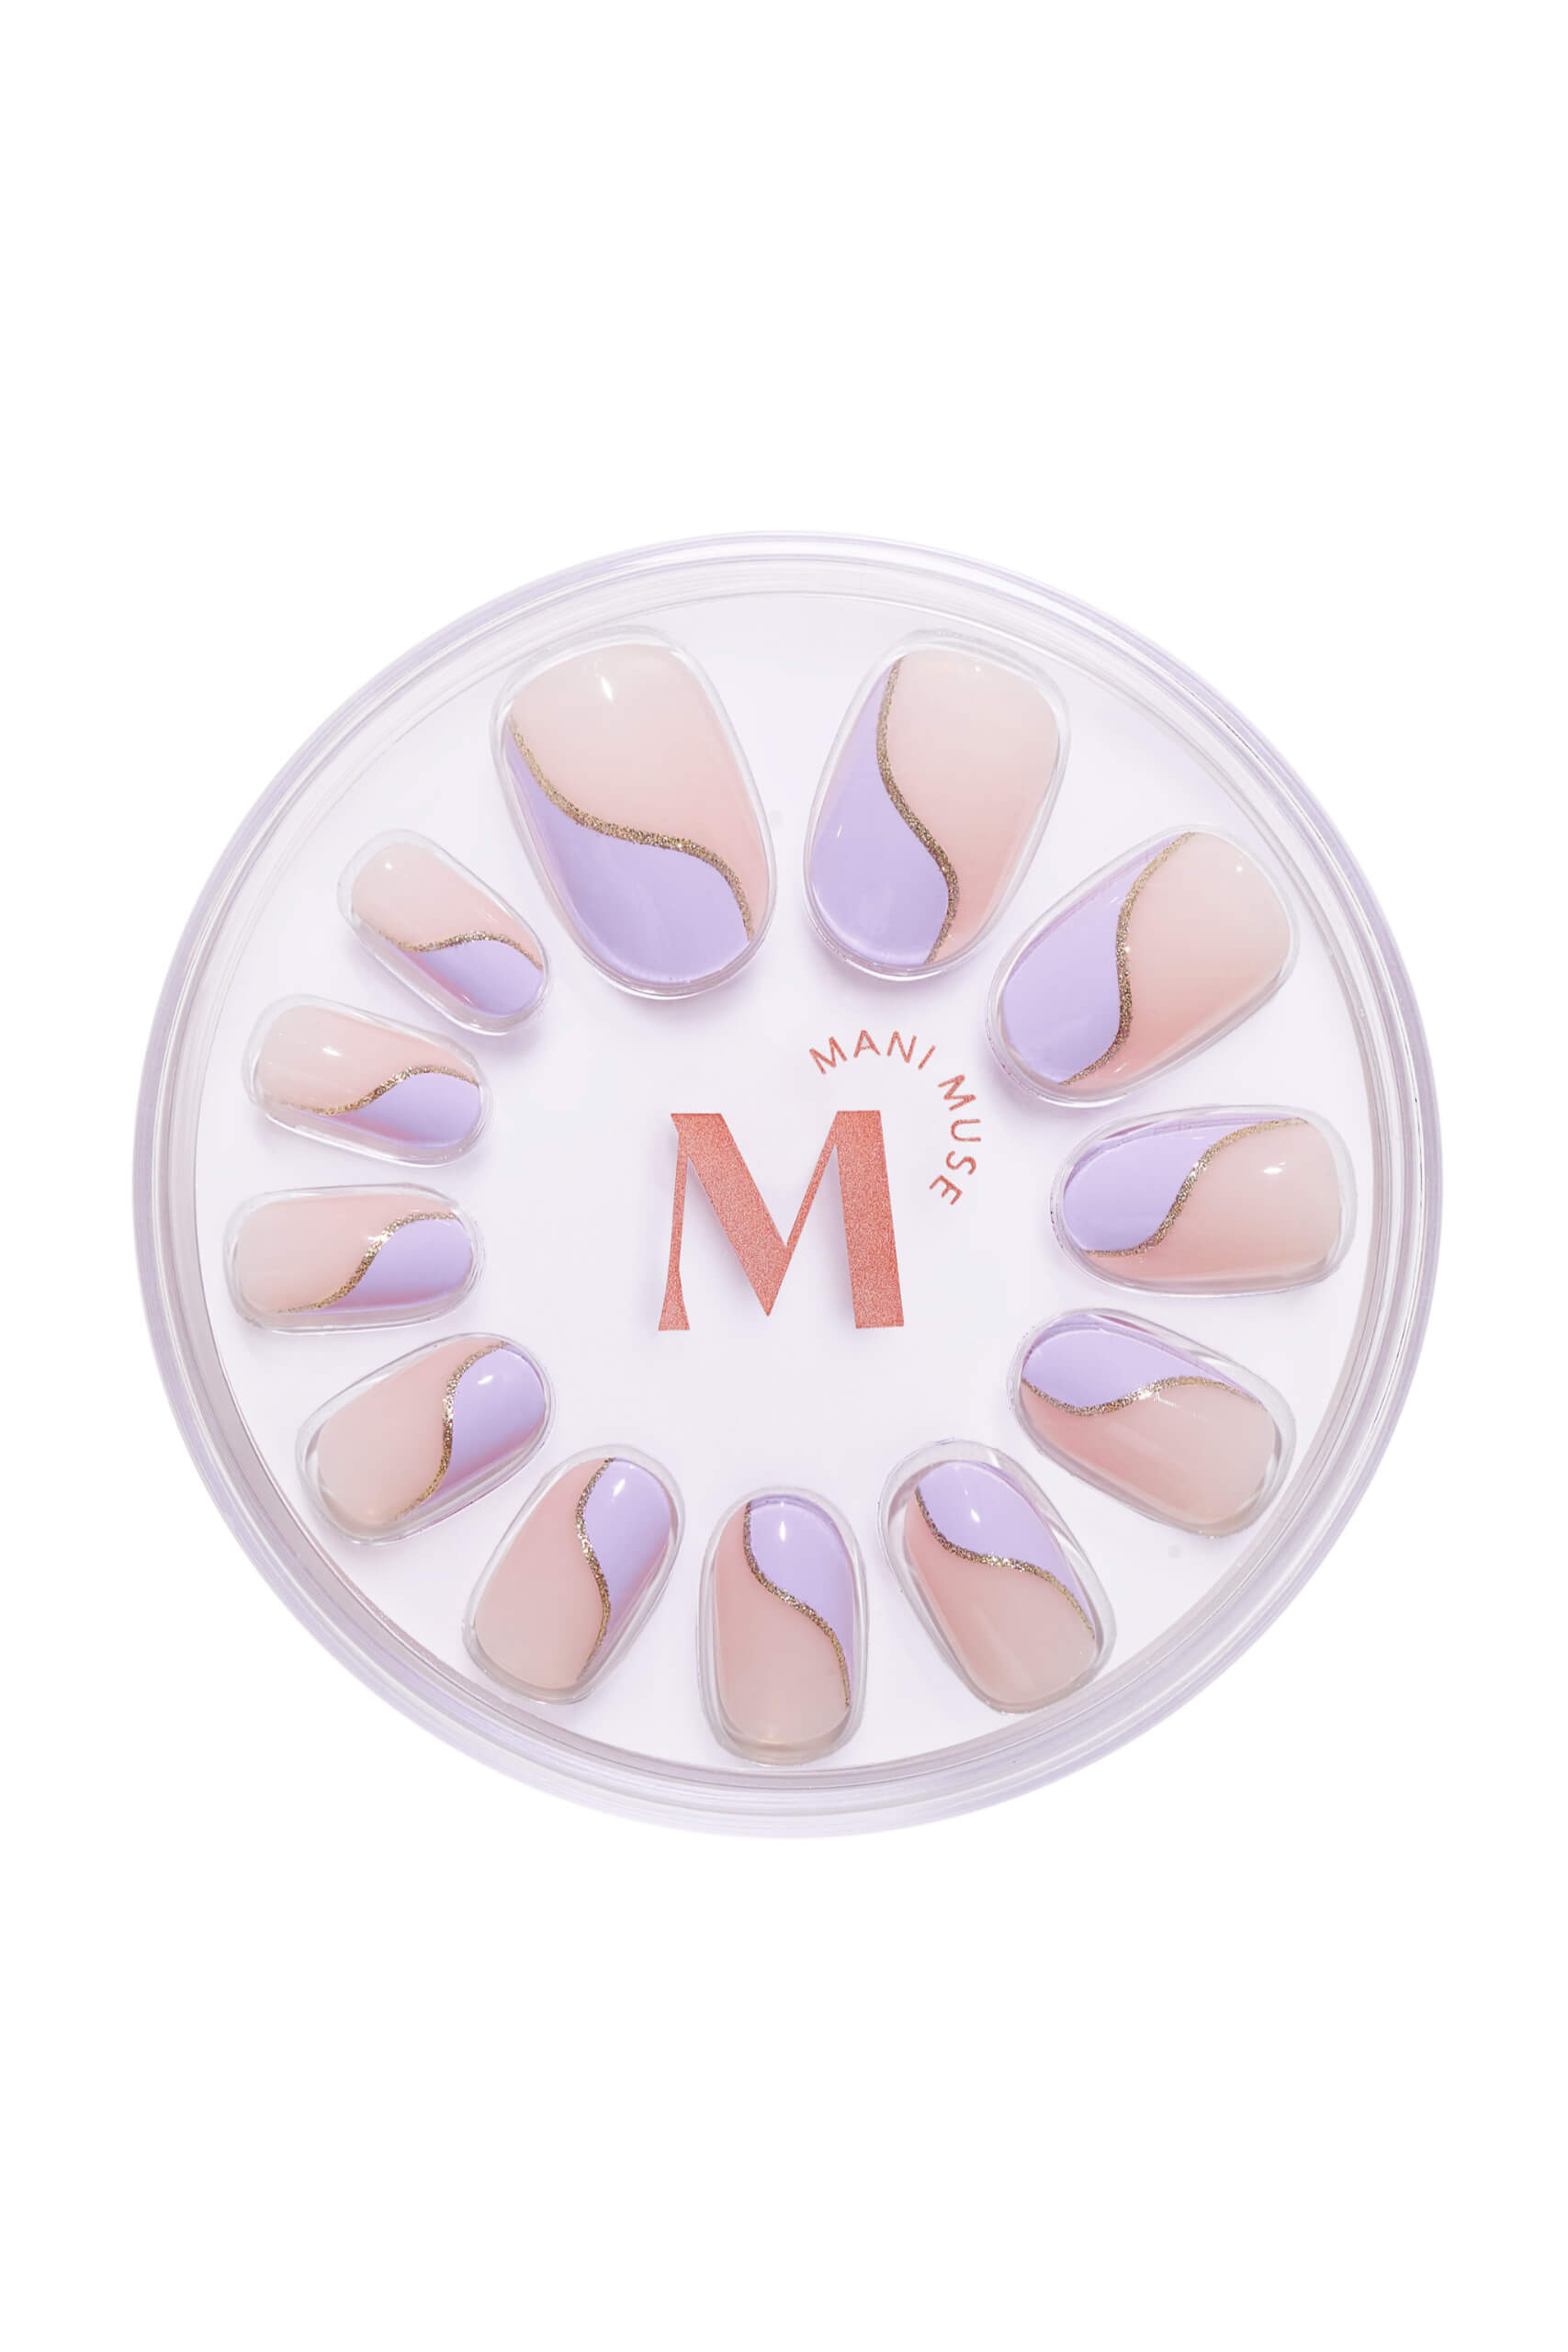 Mani Muse Pretty Little Lilacs Press-on Nails - Round